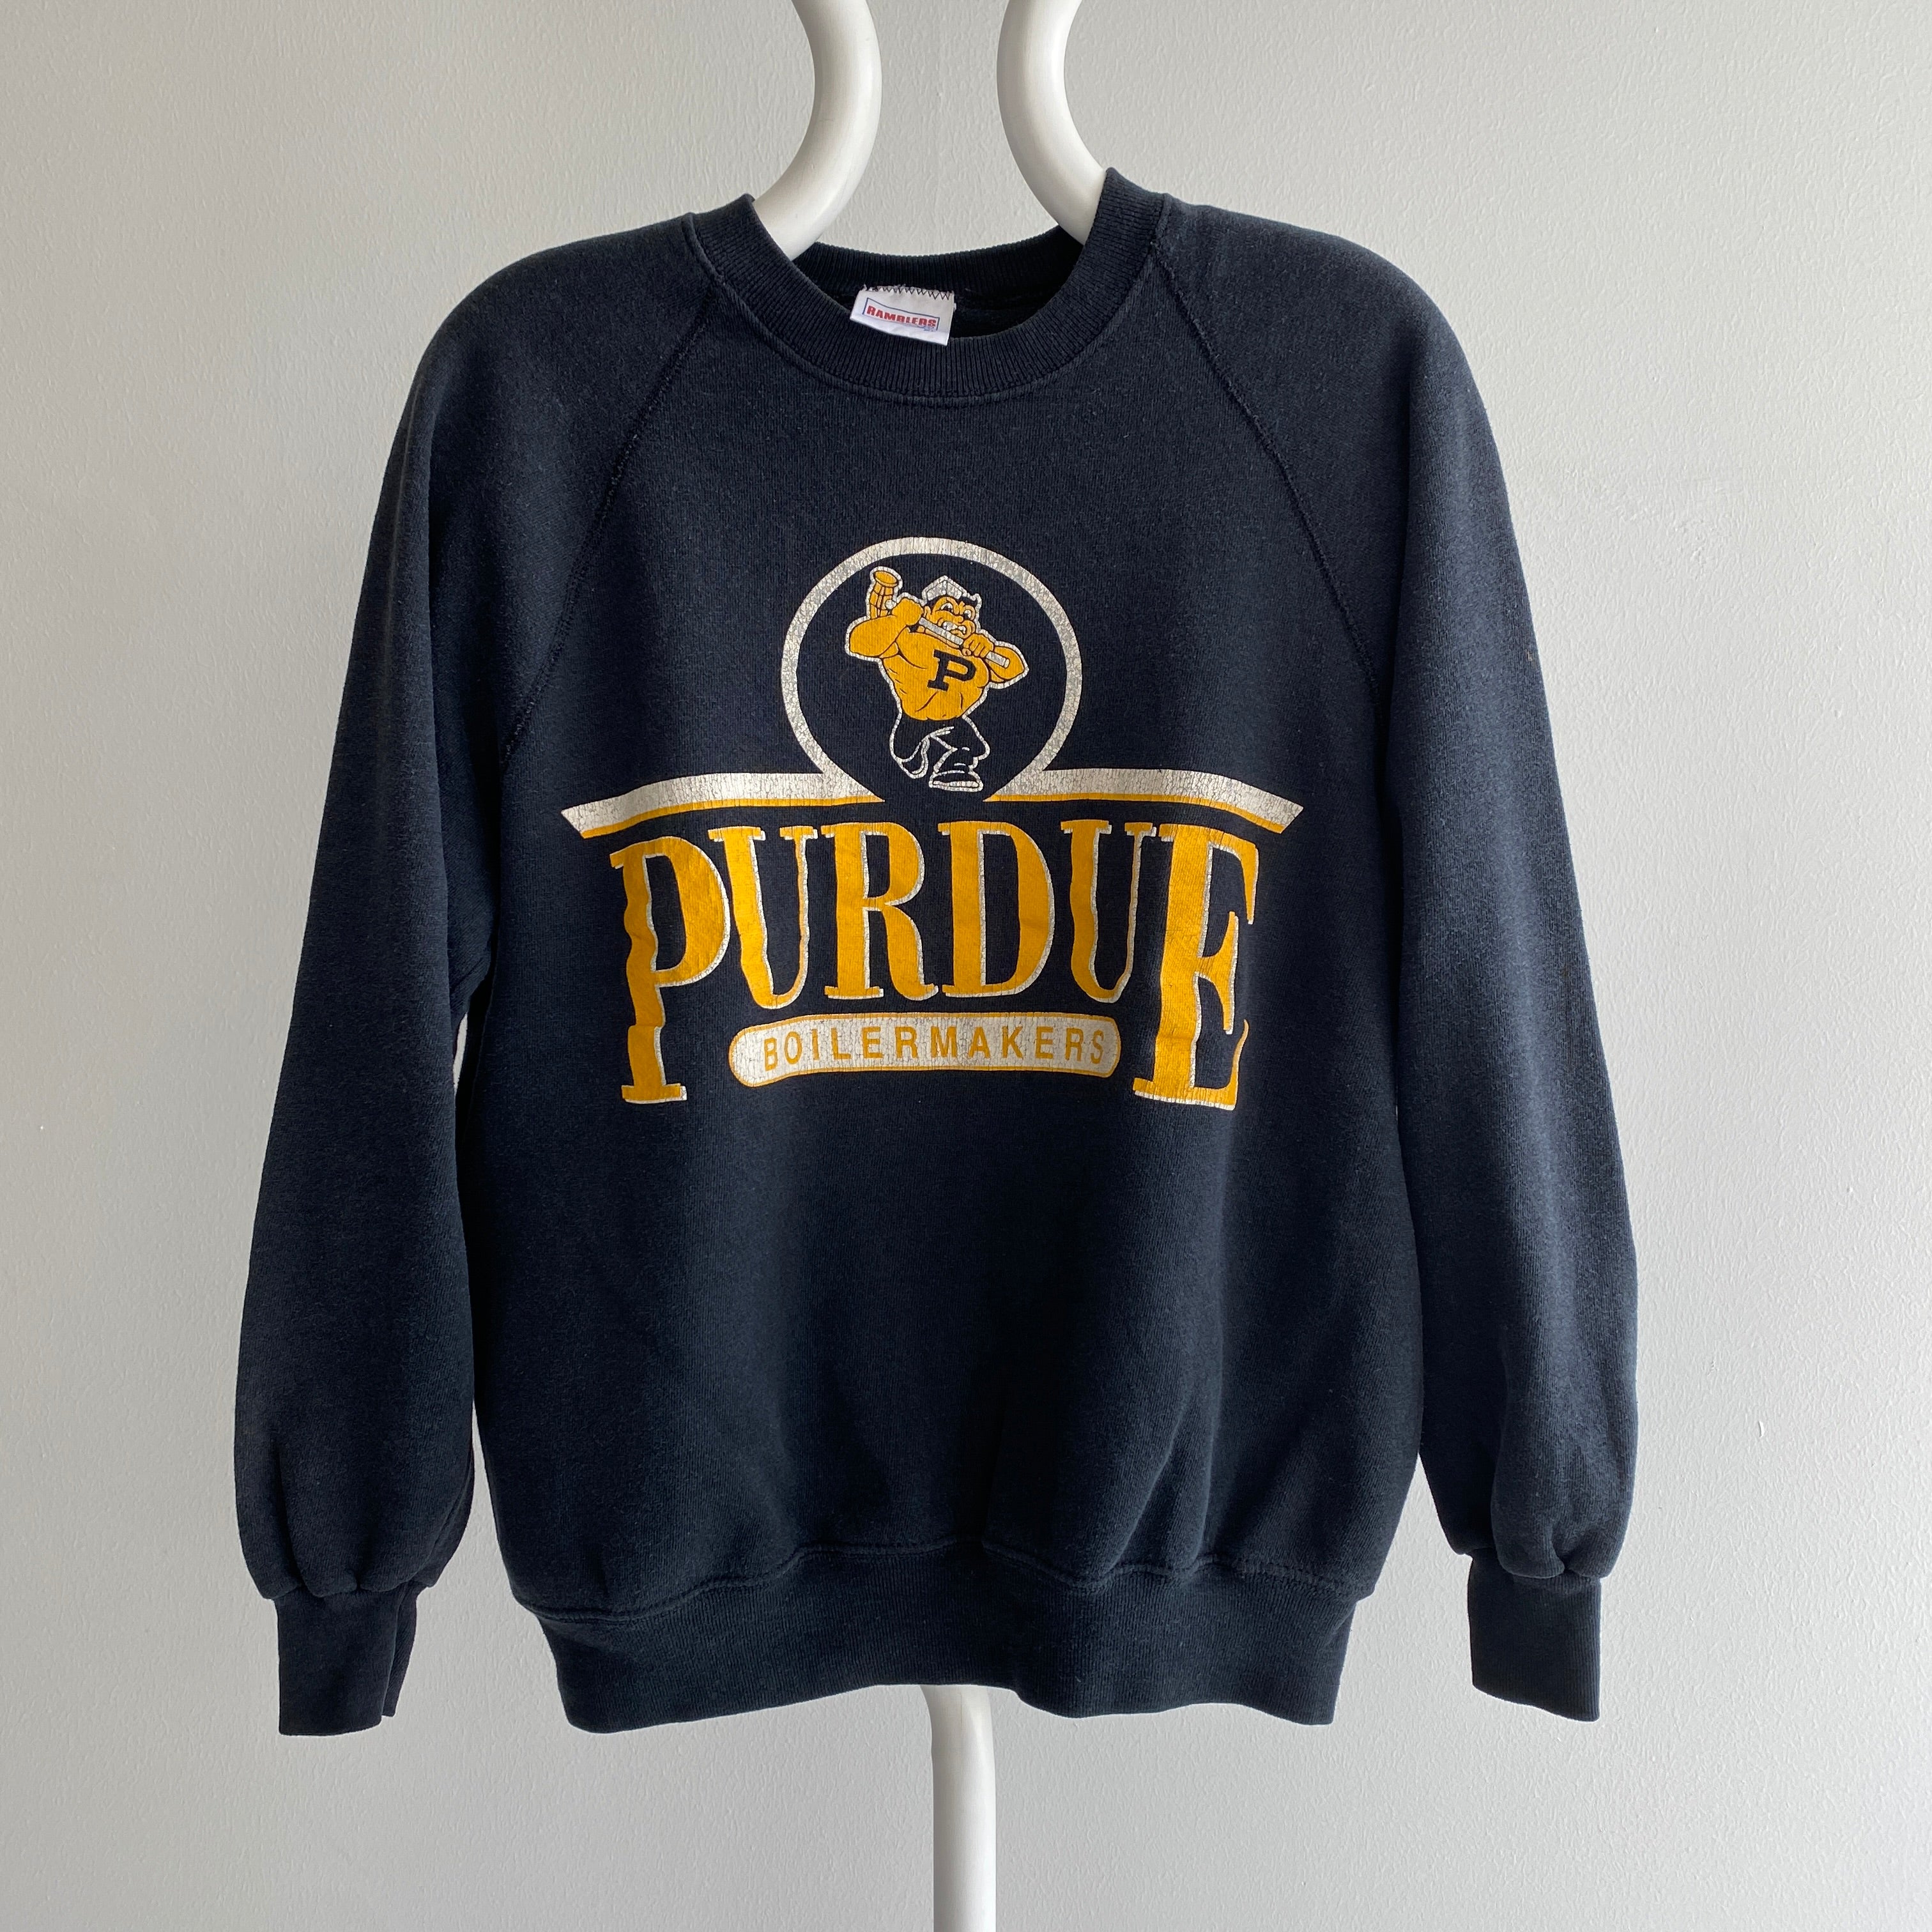 1980s Awesome Purdue University Sweatshirt